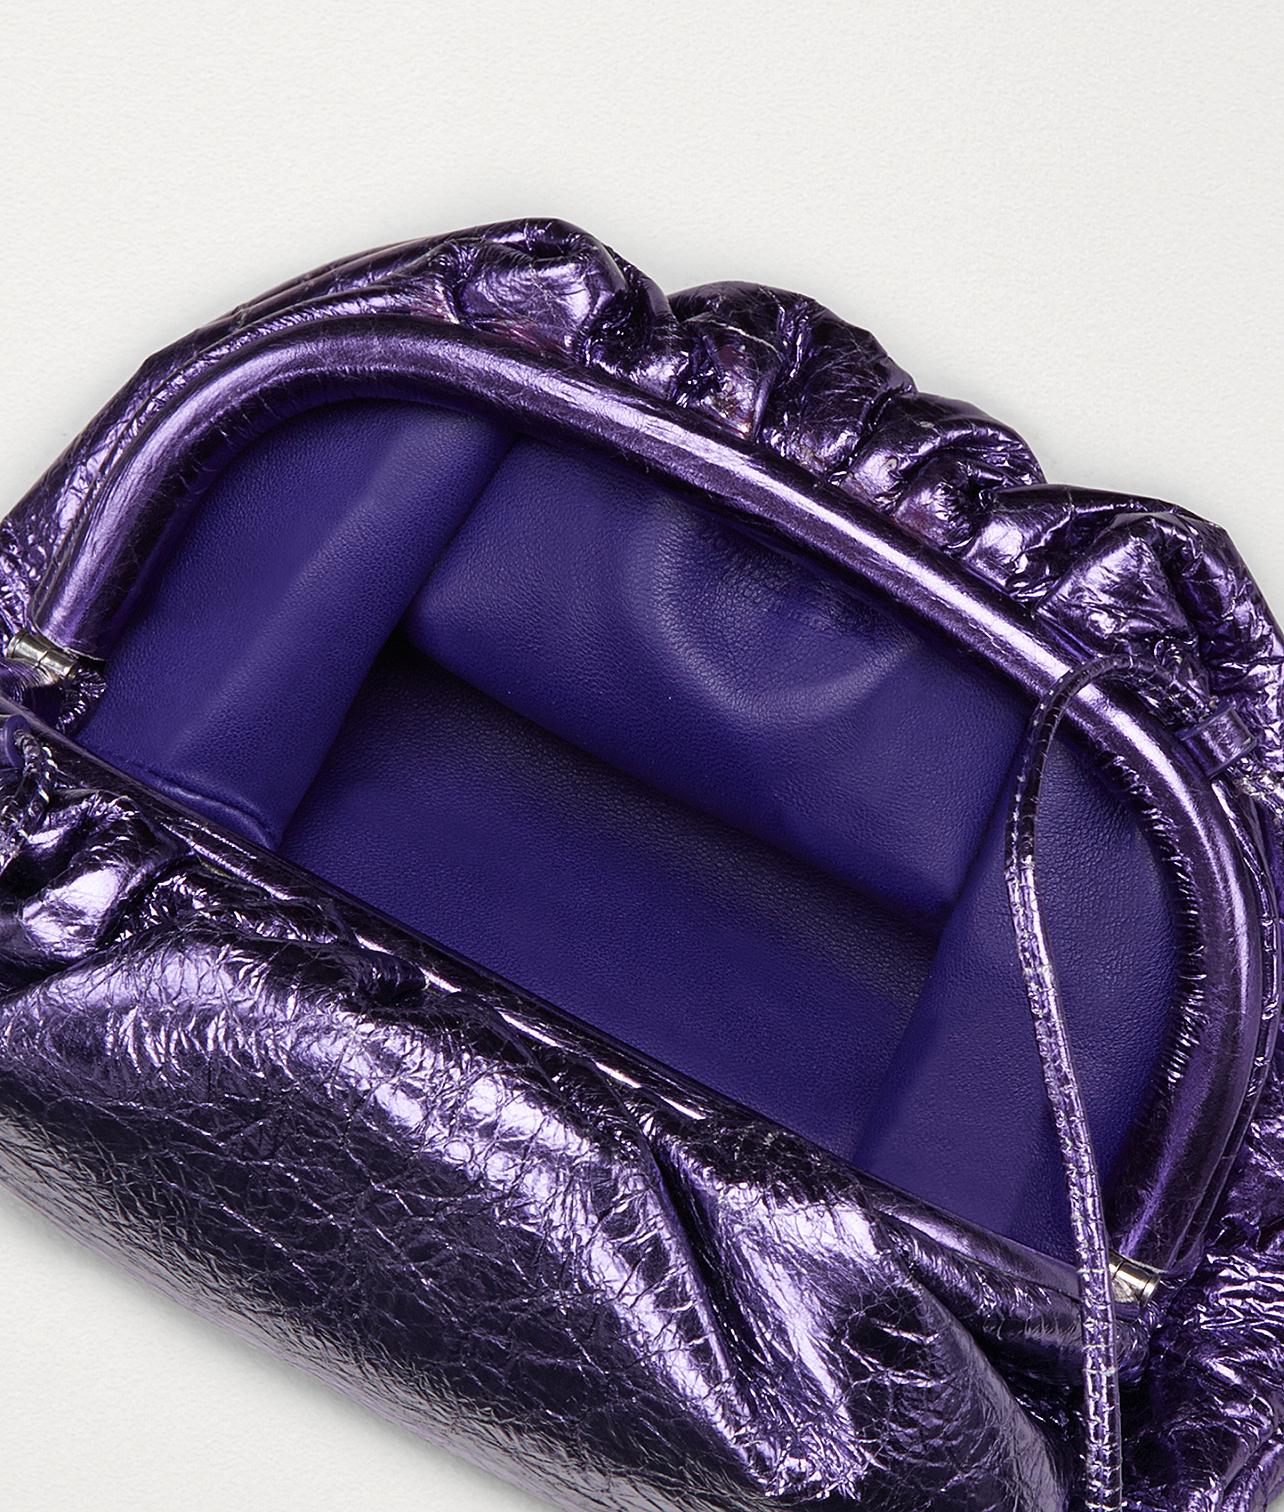 Bottega Veneta Leather The Pouch 20 In Metallic Nappa in Purple - Lyst